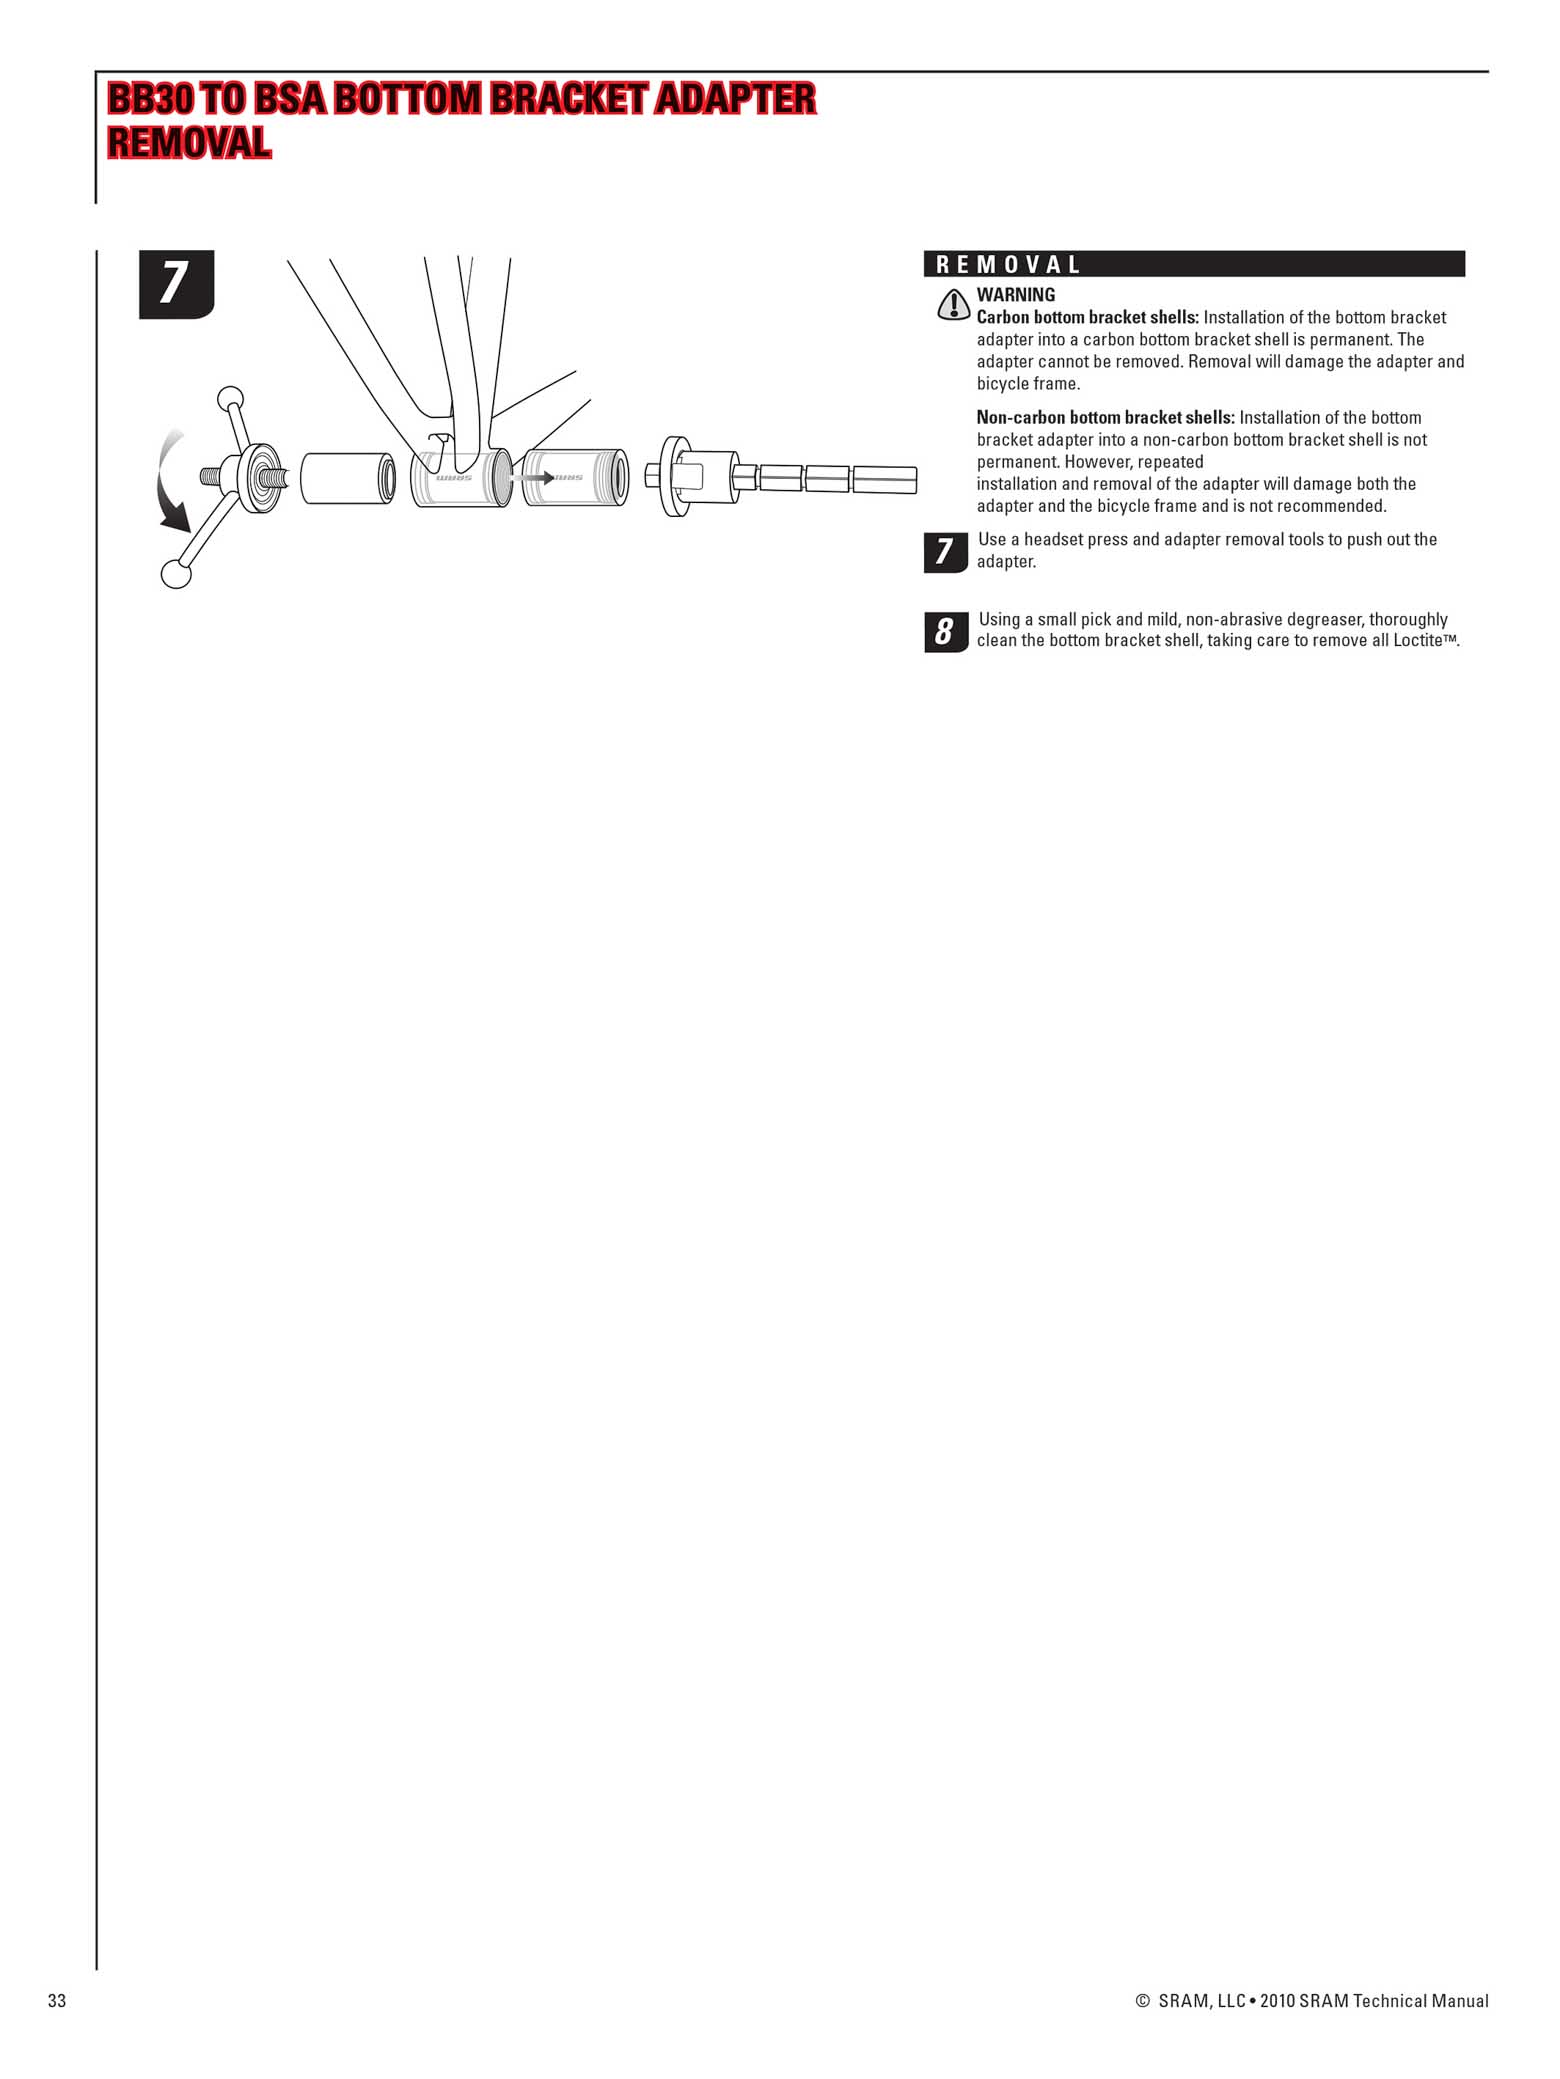 SRAM Technical Manual 2010 page 033 main image